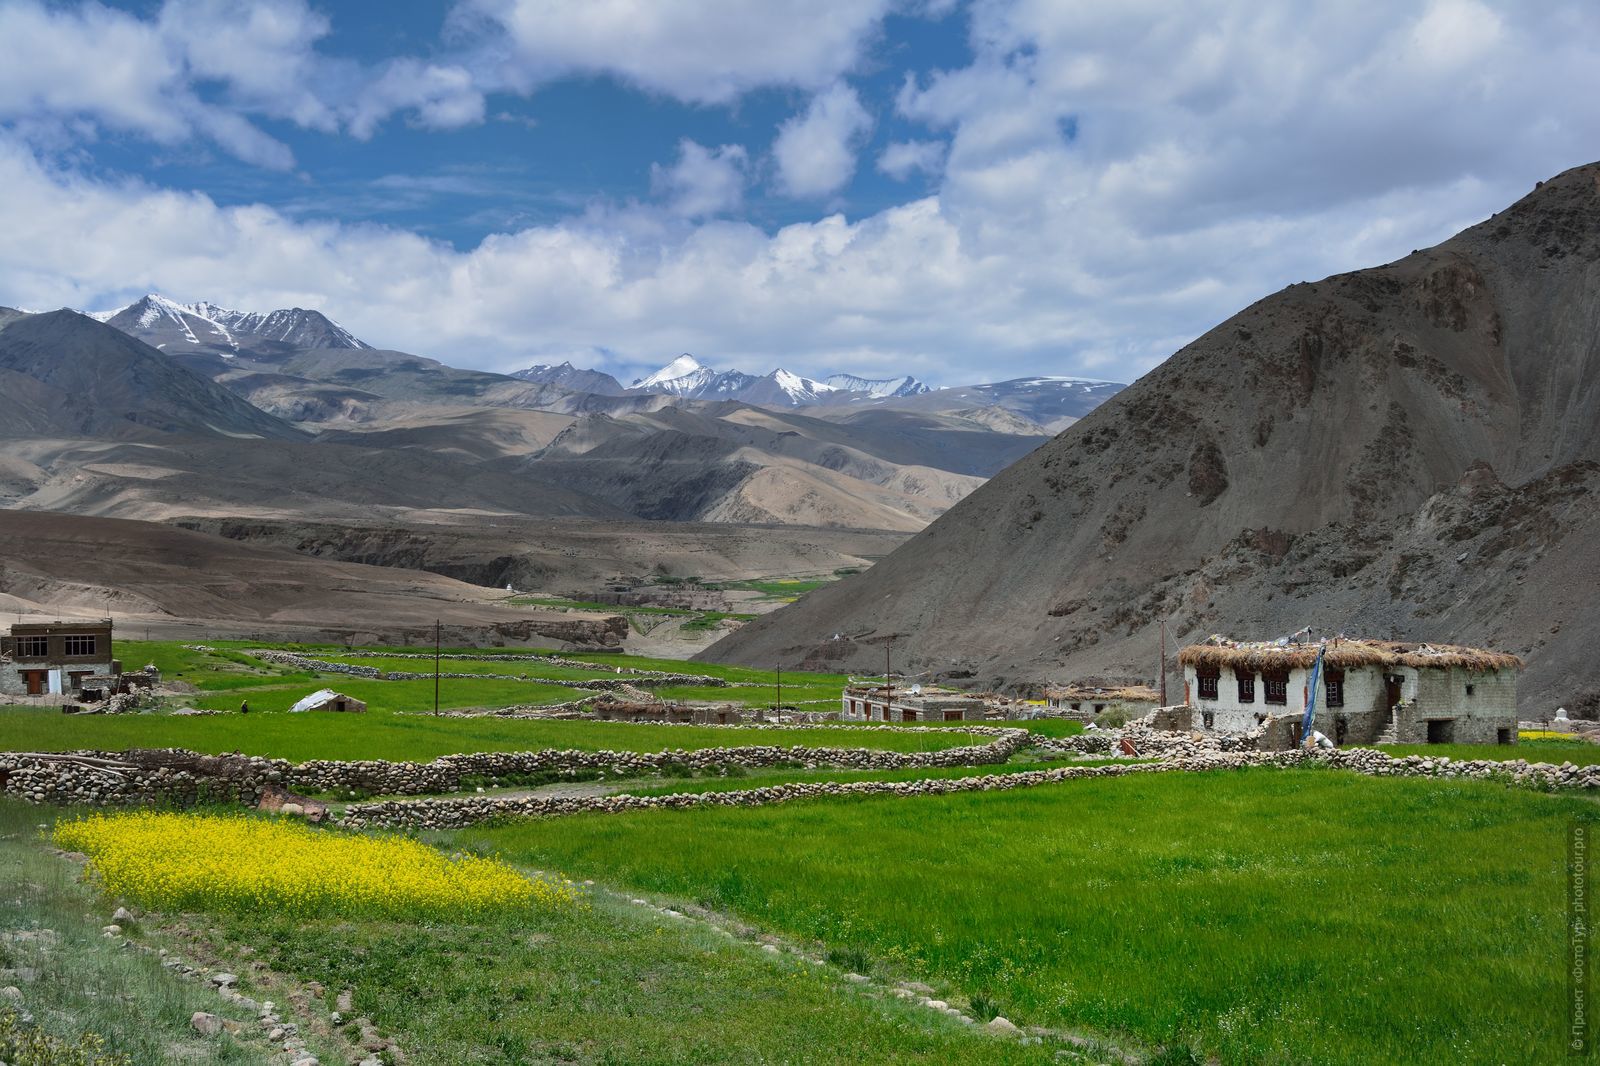 Rumtse Village. Tour Legends of Tibet: Ladakh, Lamayuru, Da Khan and Nubra, 19.09. - 28.09.2019.